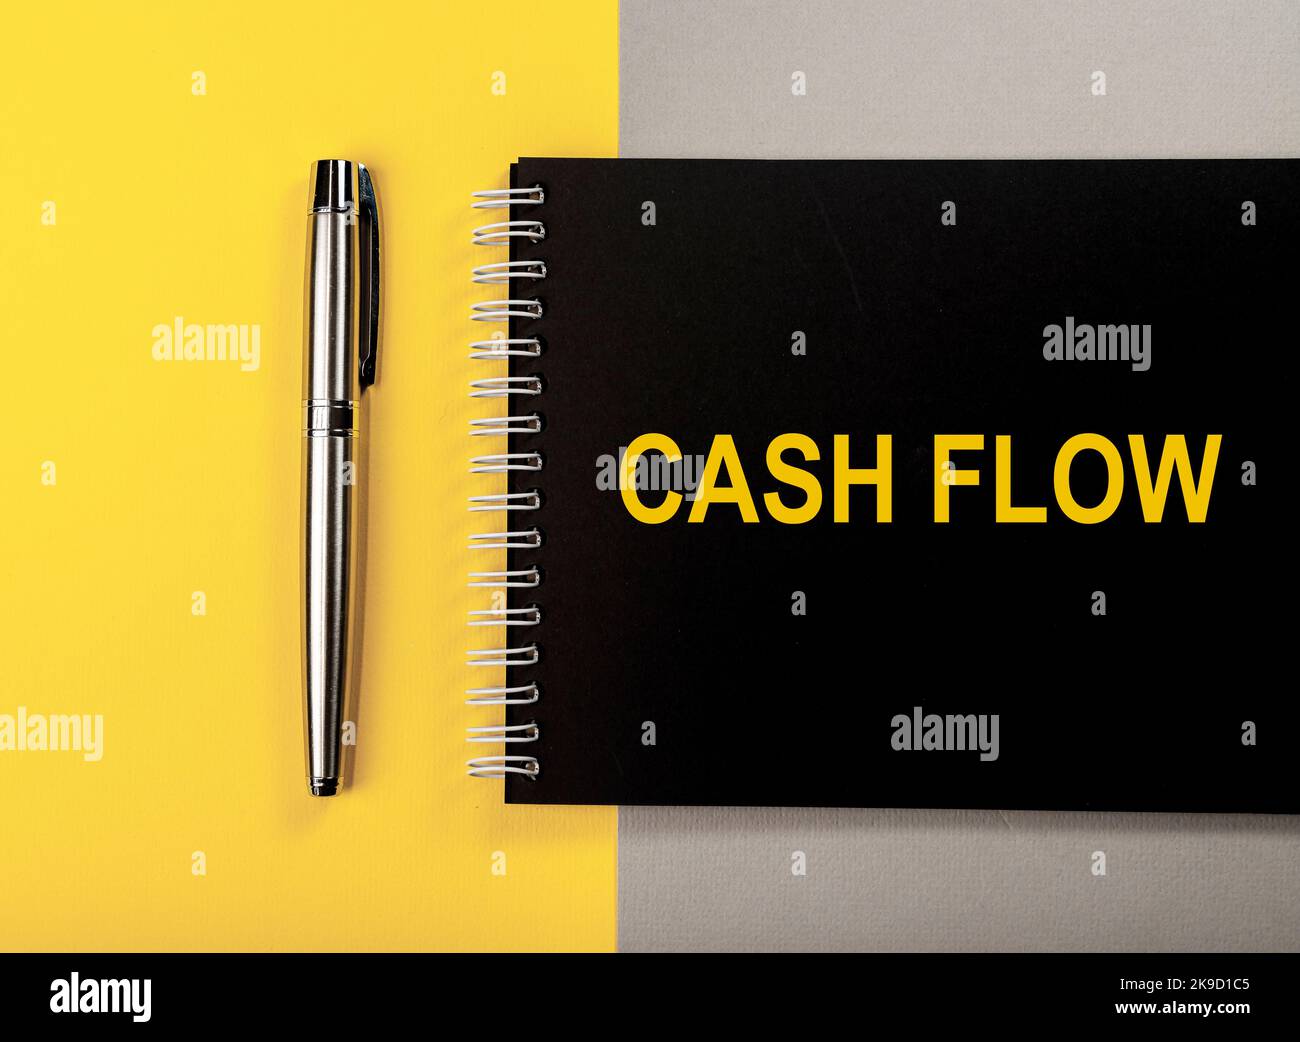 Kapitalflussrechnung. Cashflow, Gewinn, Gewinn. Bankenkonzept. Hochwertige Fotos Stockfoto